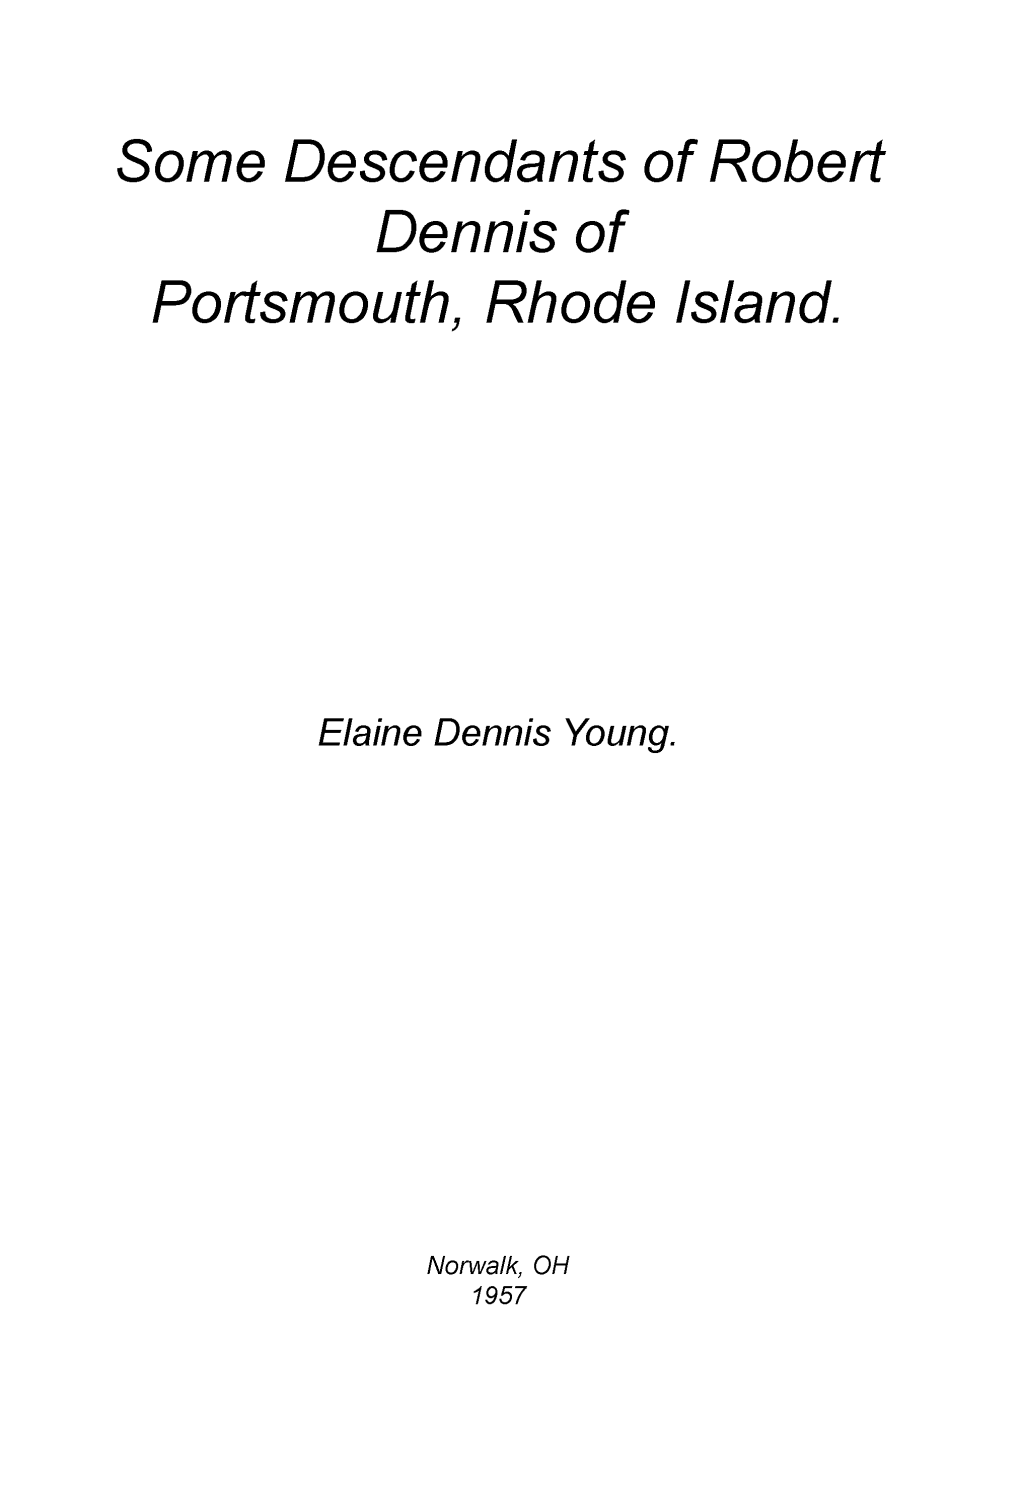 Some Descendants of Robert Dennis of Portsmouth, Rhode Island